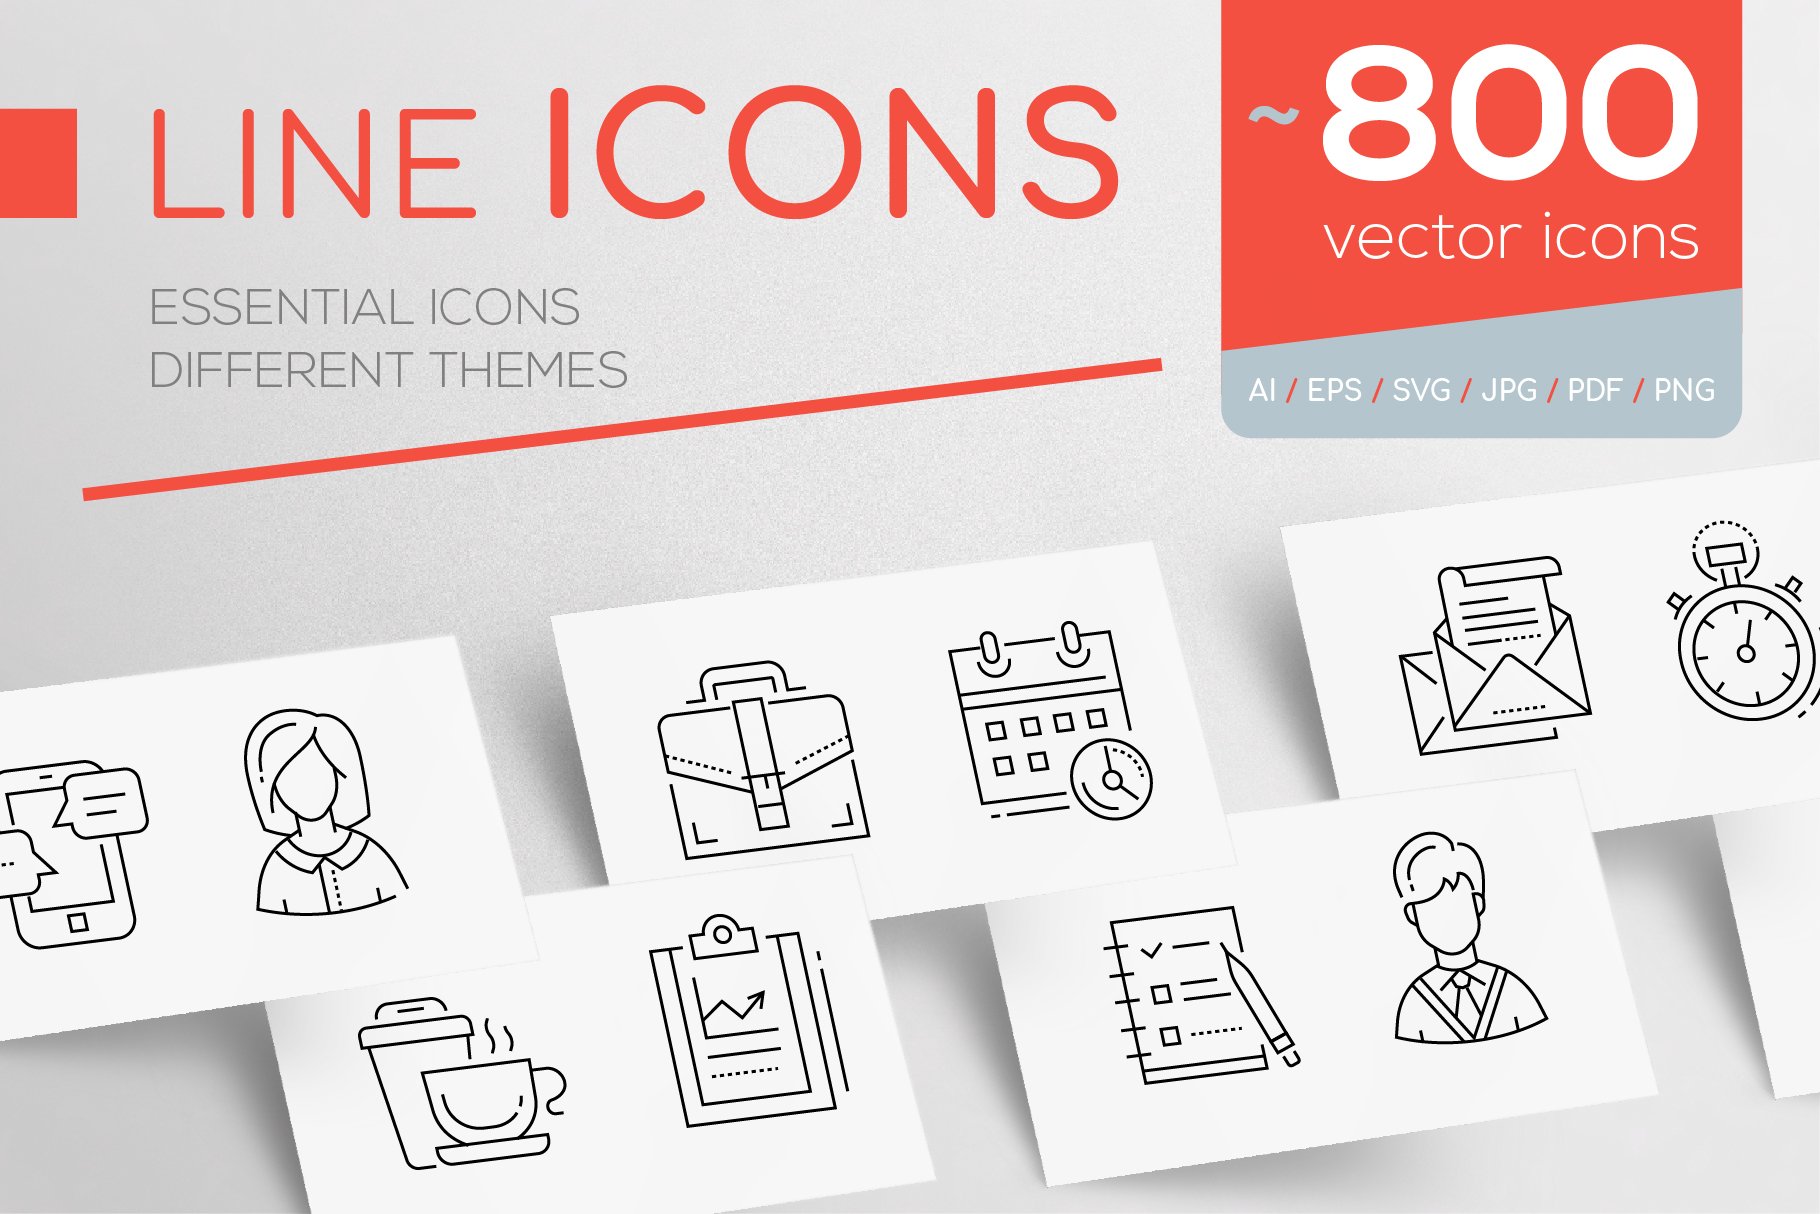 Line Design Icons Bundle cover image.